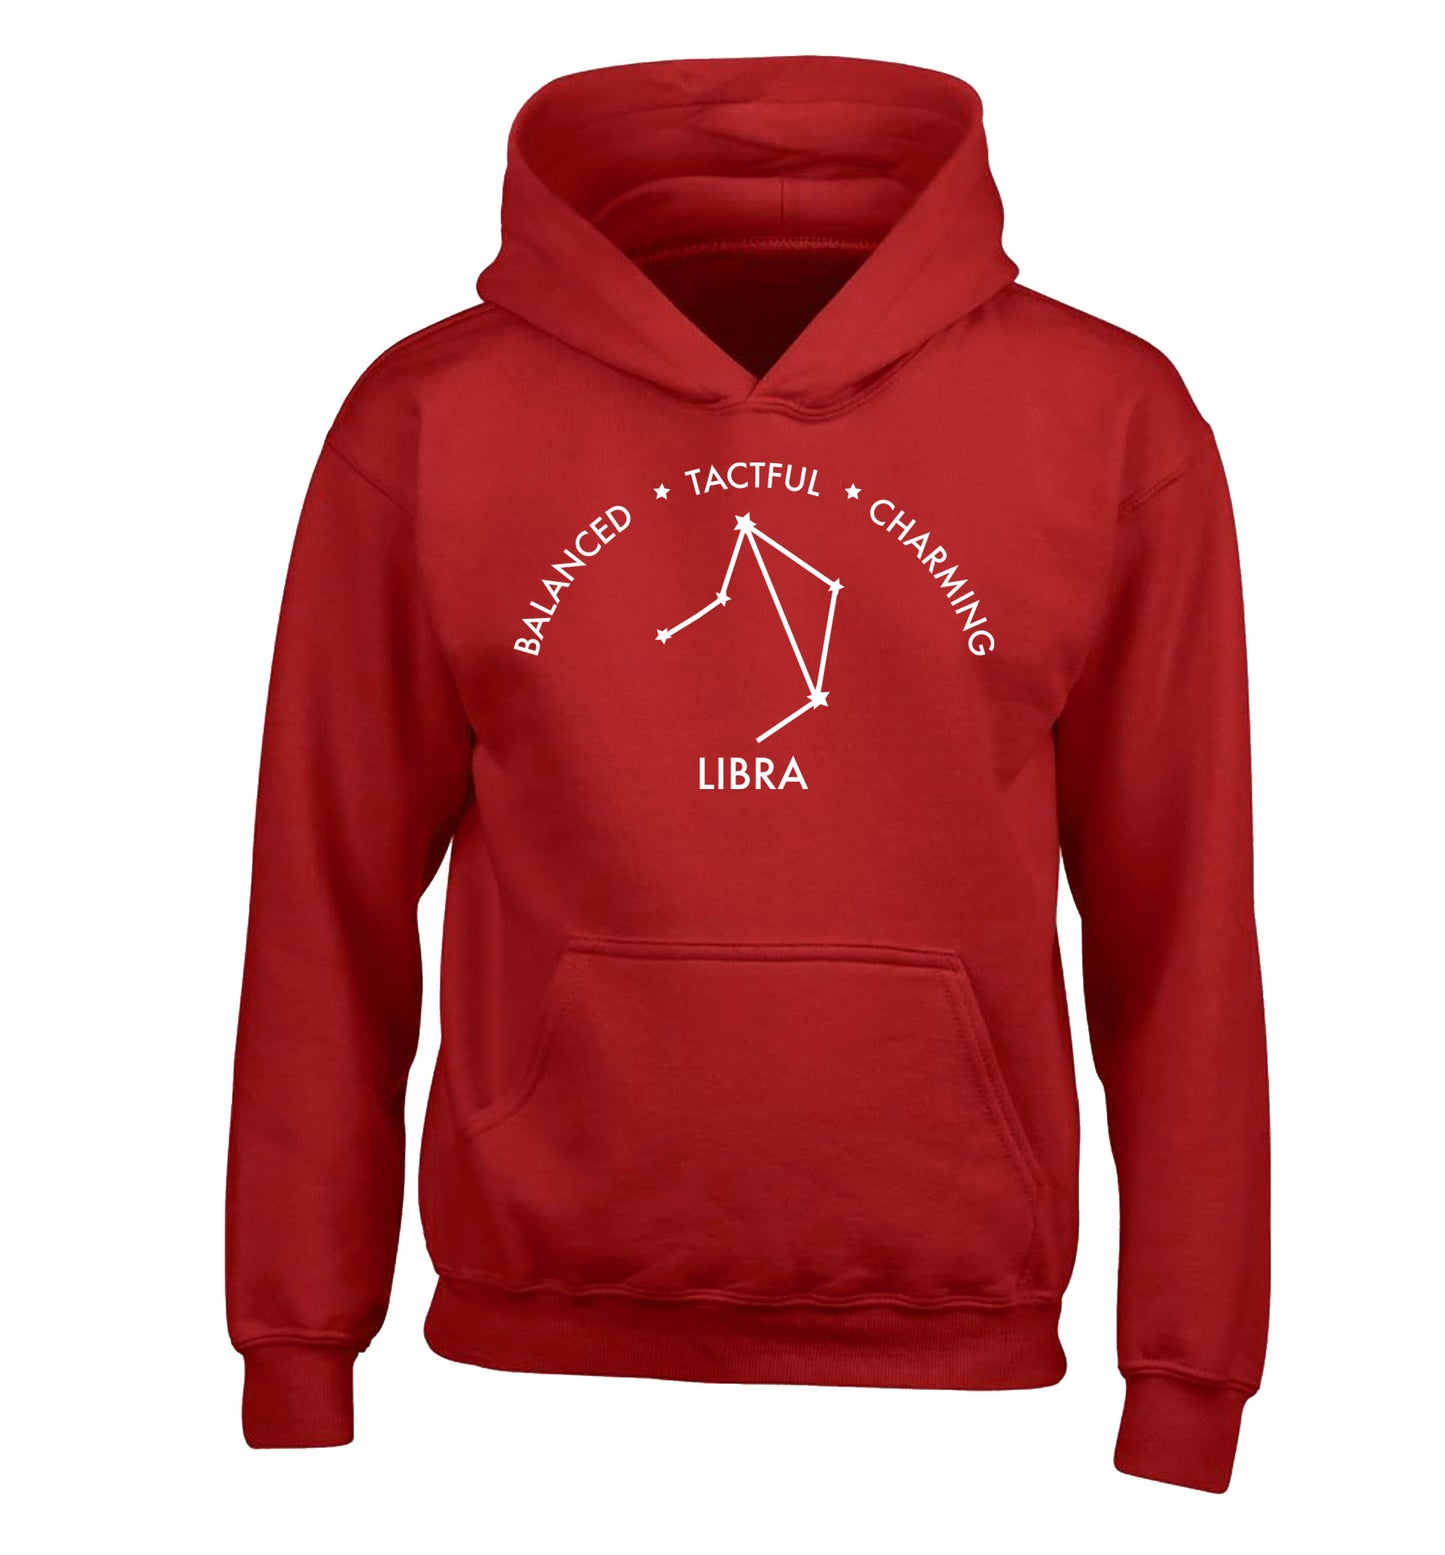 Libra: Balanced, Tactful, Charming children's red hoodie 12-13 Years